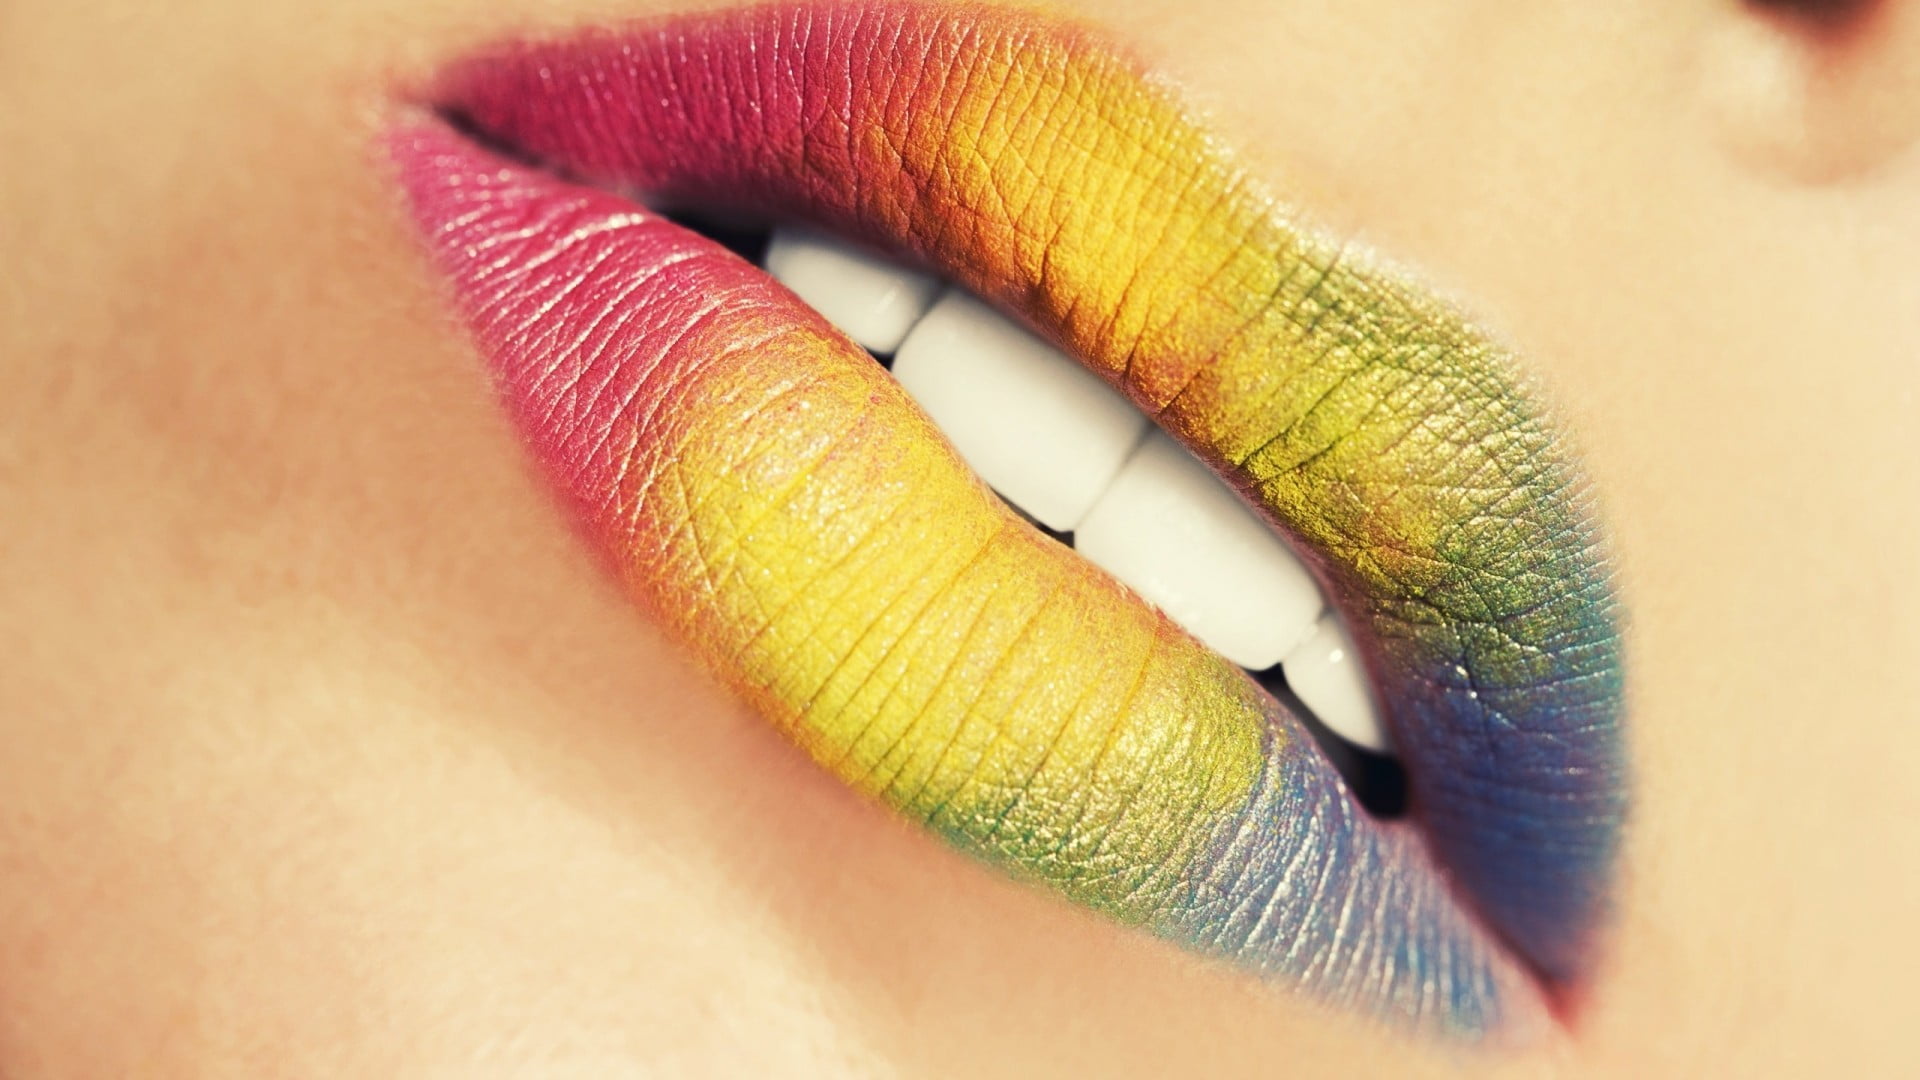 lips, women, colorful, face, teeth, closeup, blue, red, green